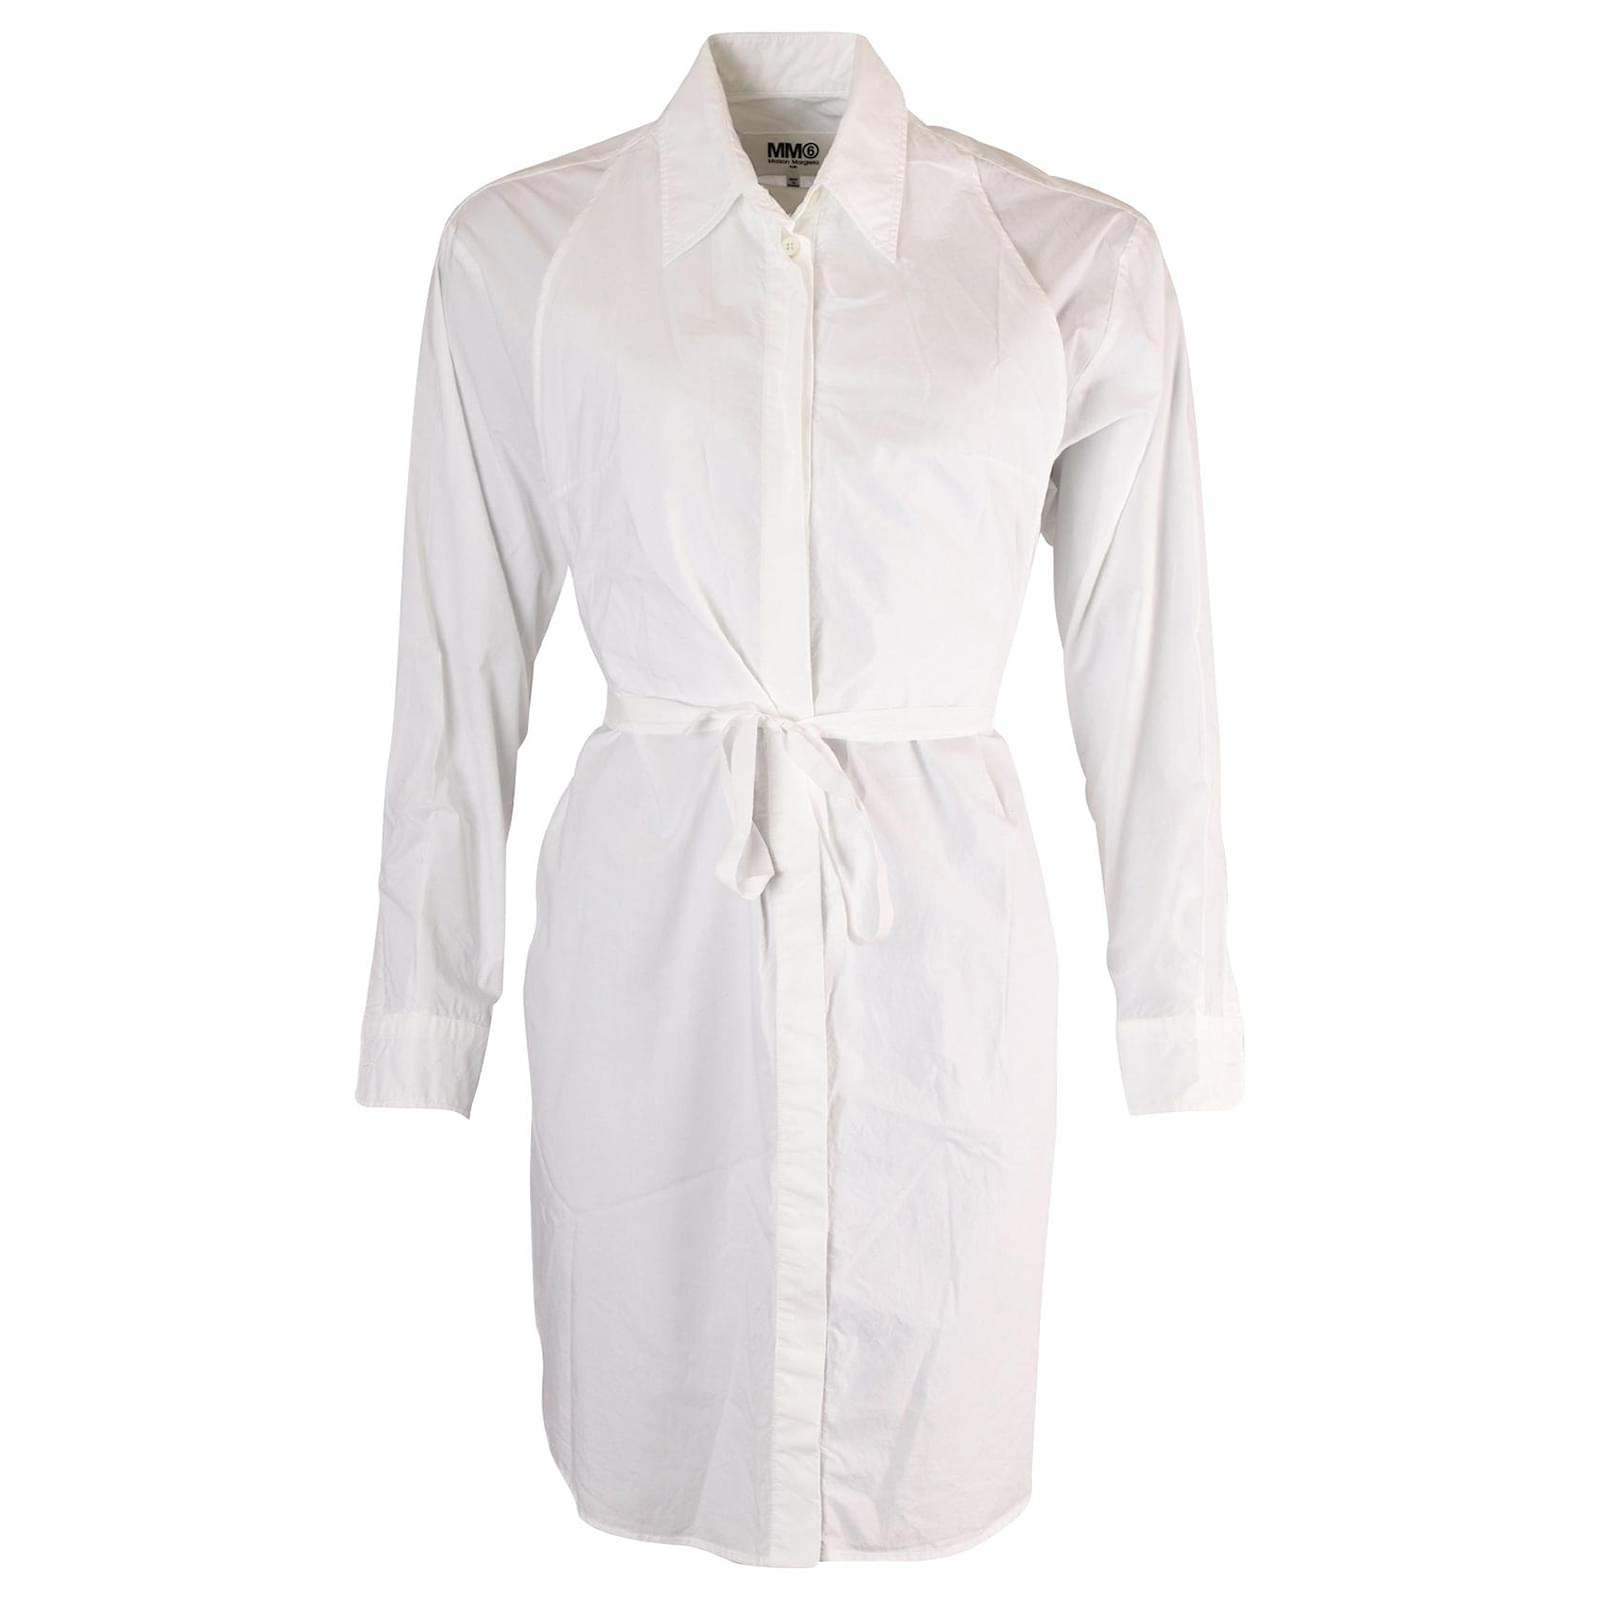 MM6 Maison Margiela Dress Shirt in White Cotton